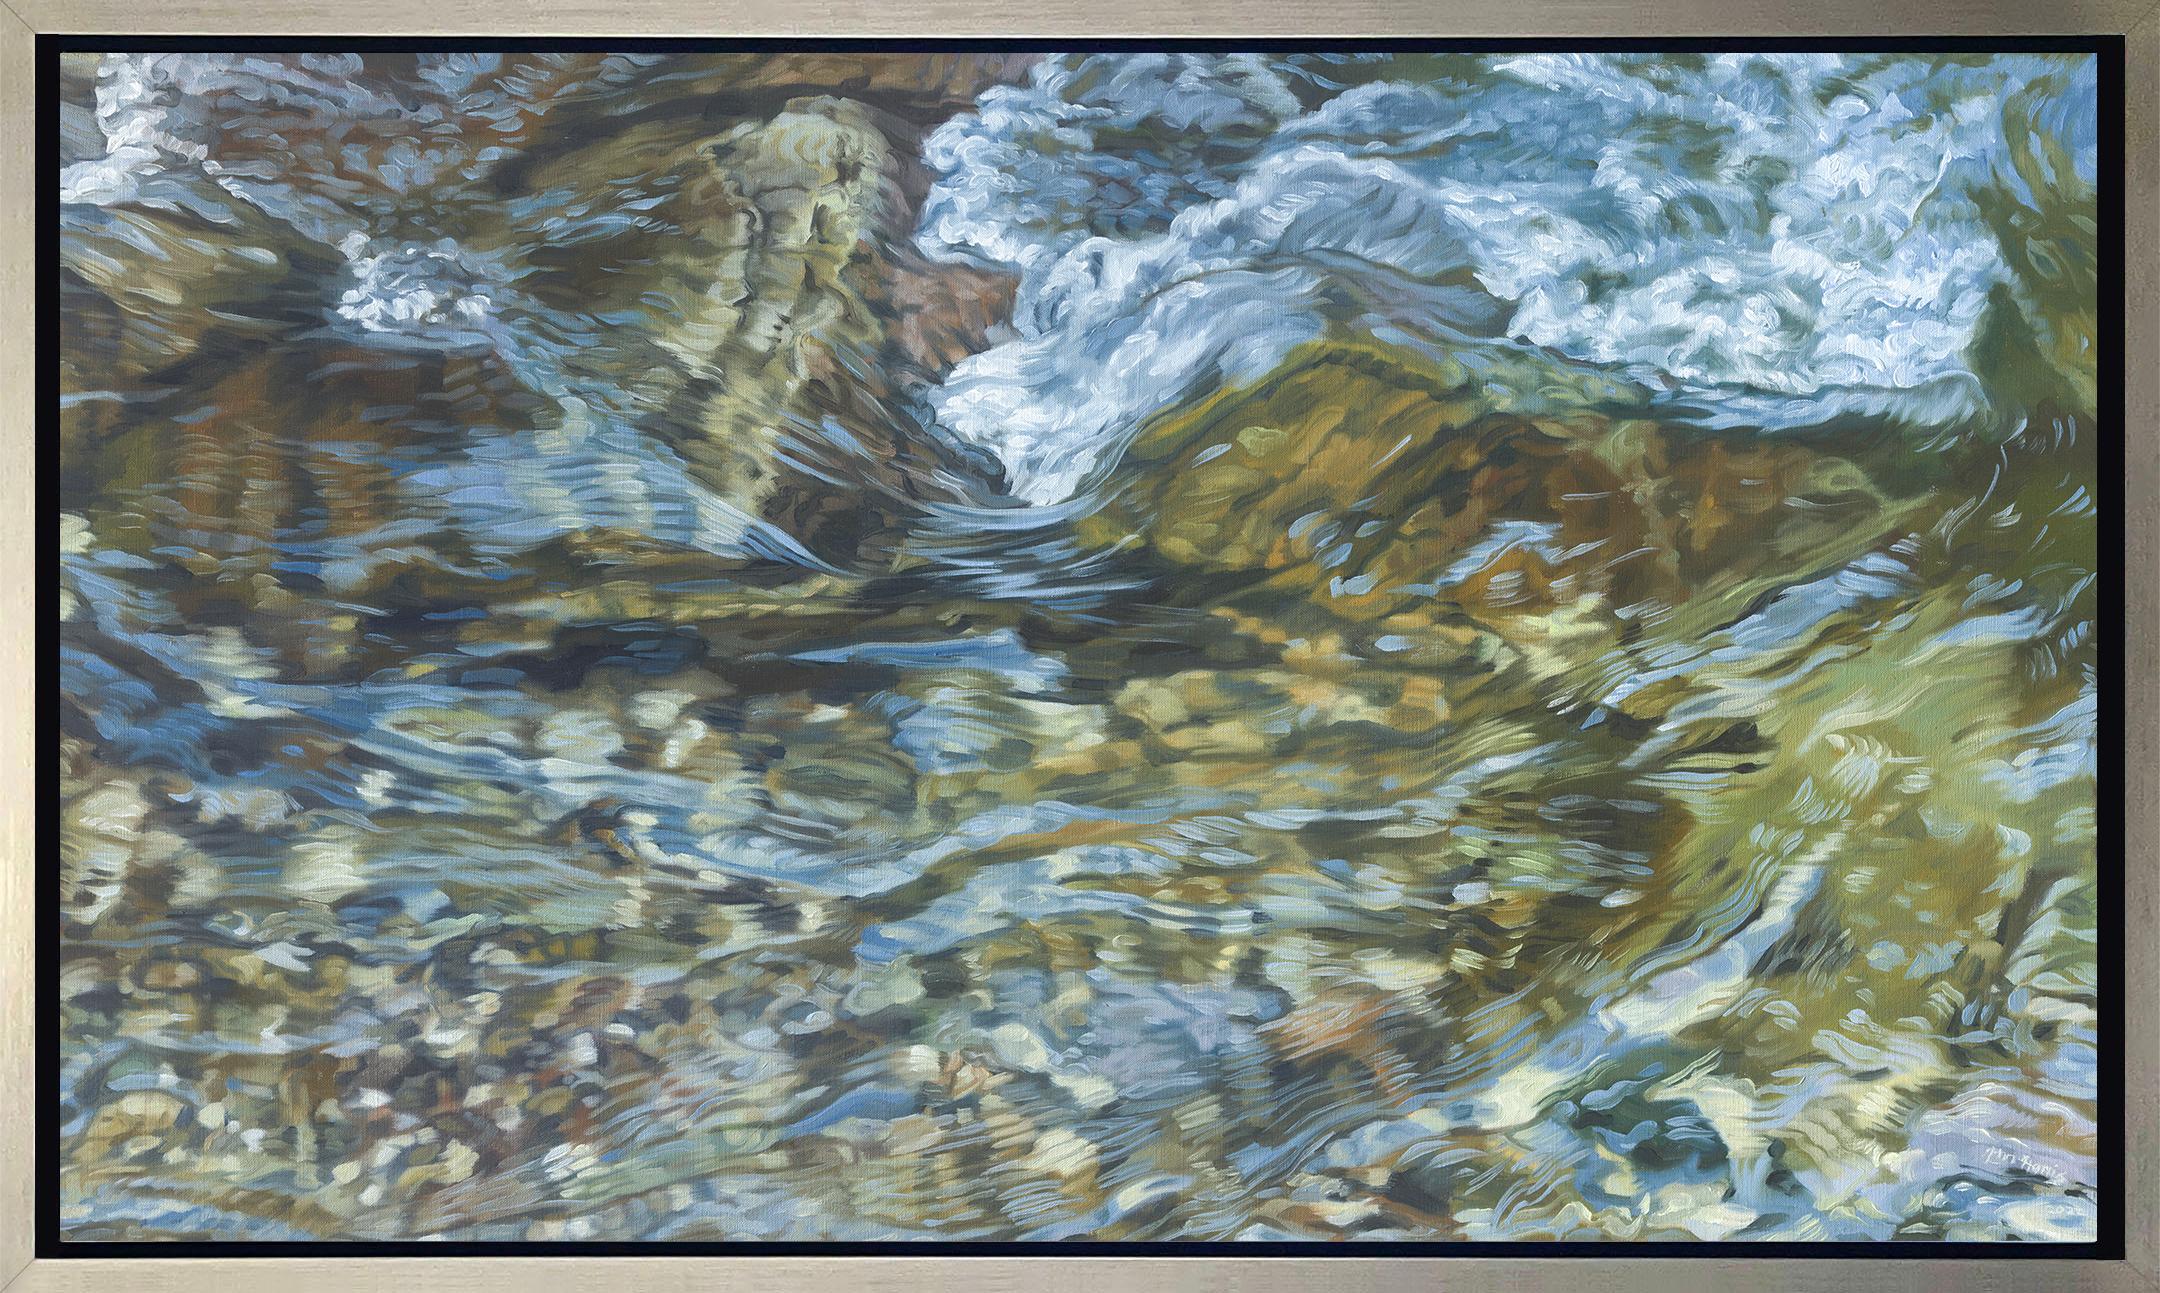 John Harris (painter) Landscape Print - "Streambed III, " Framed Limited Edition Giclee Print, 36" x 60"